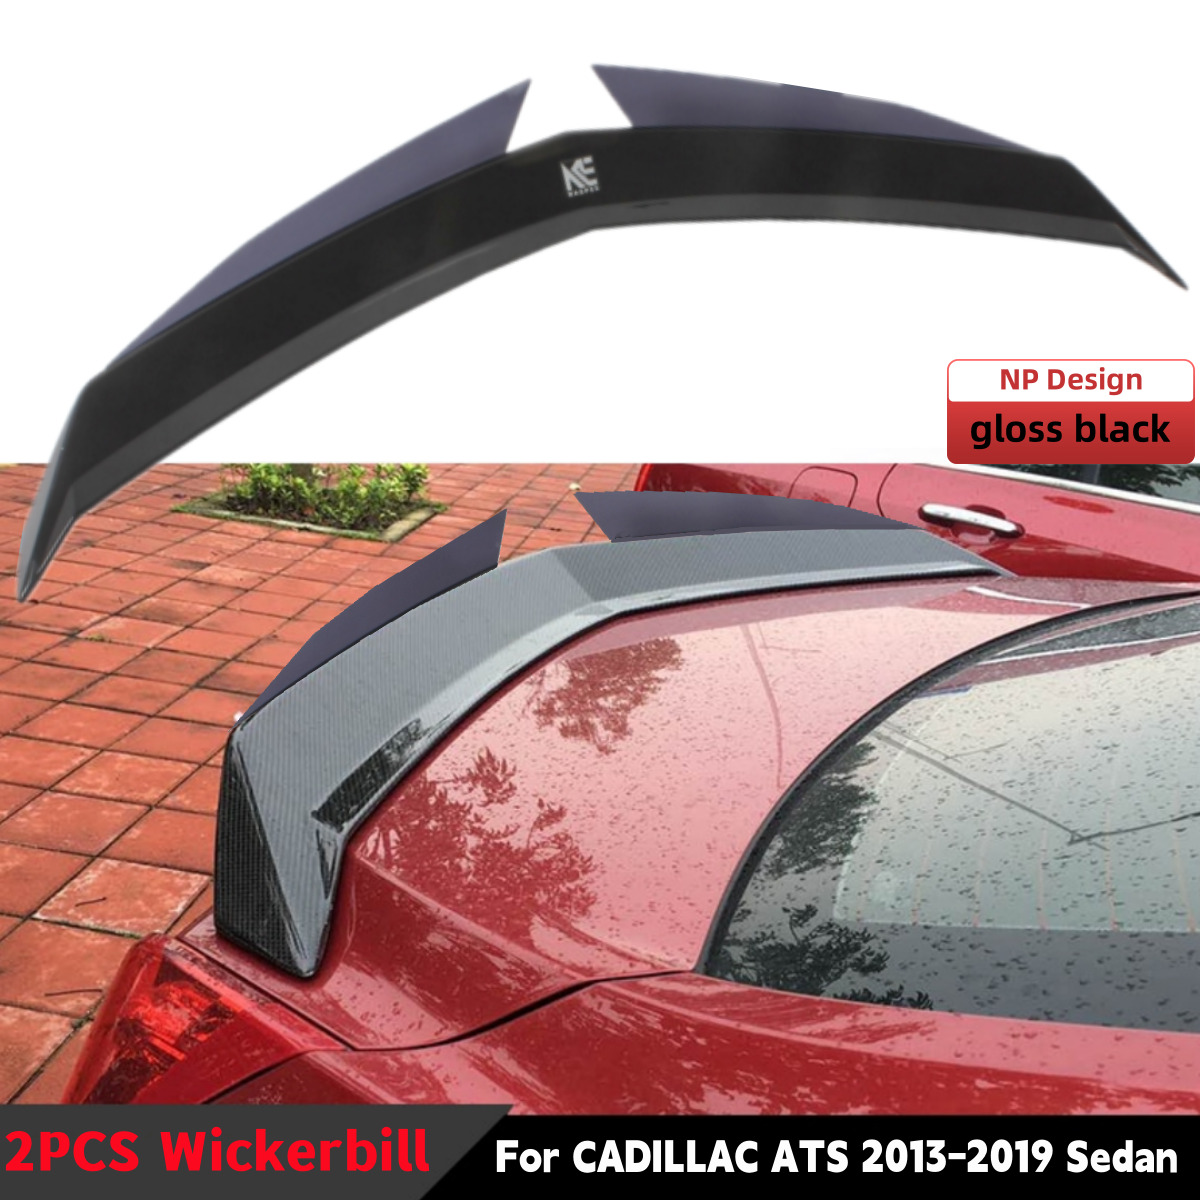 NPDesigns 2PC Wickerbill + Spoiler Wing Gloss black For Cadillac ATS Sedan 13-18